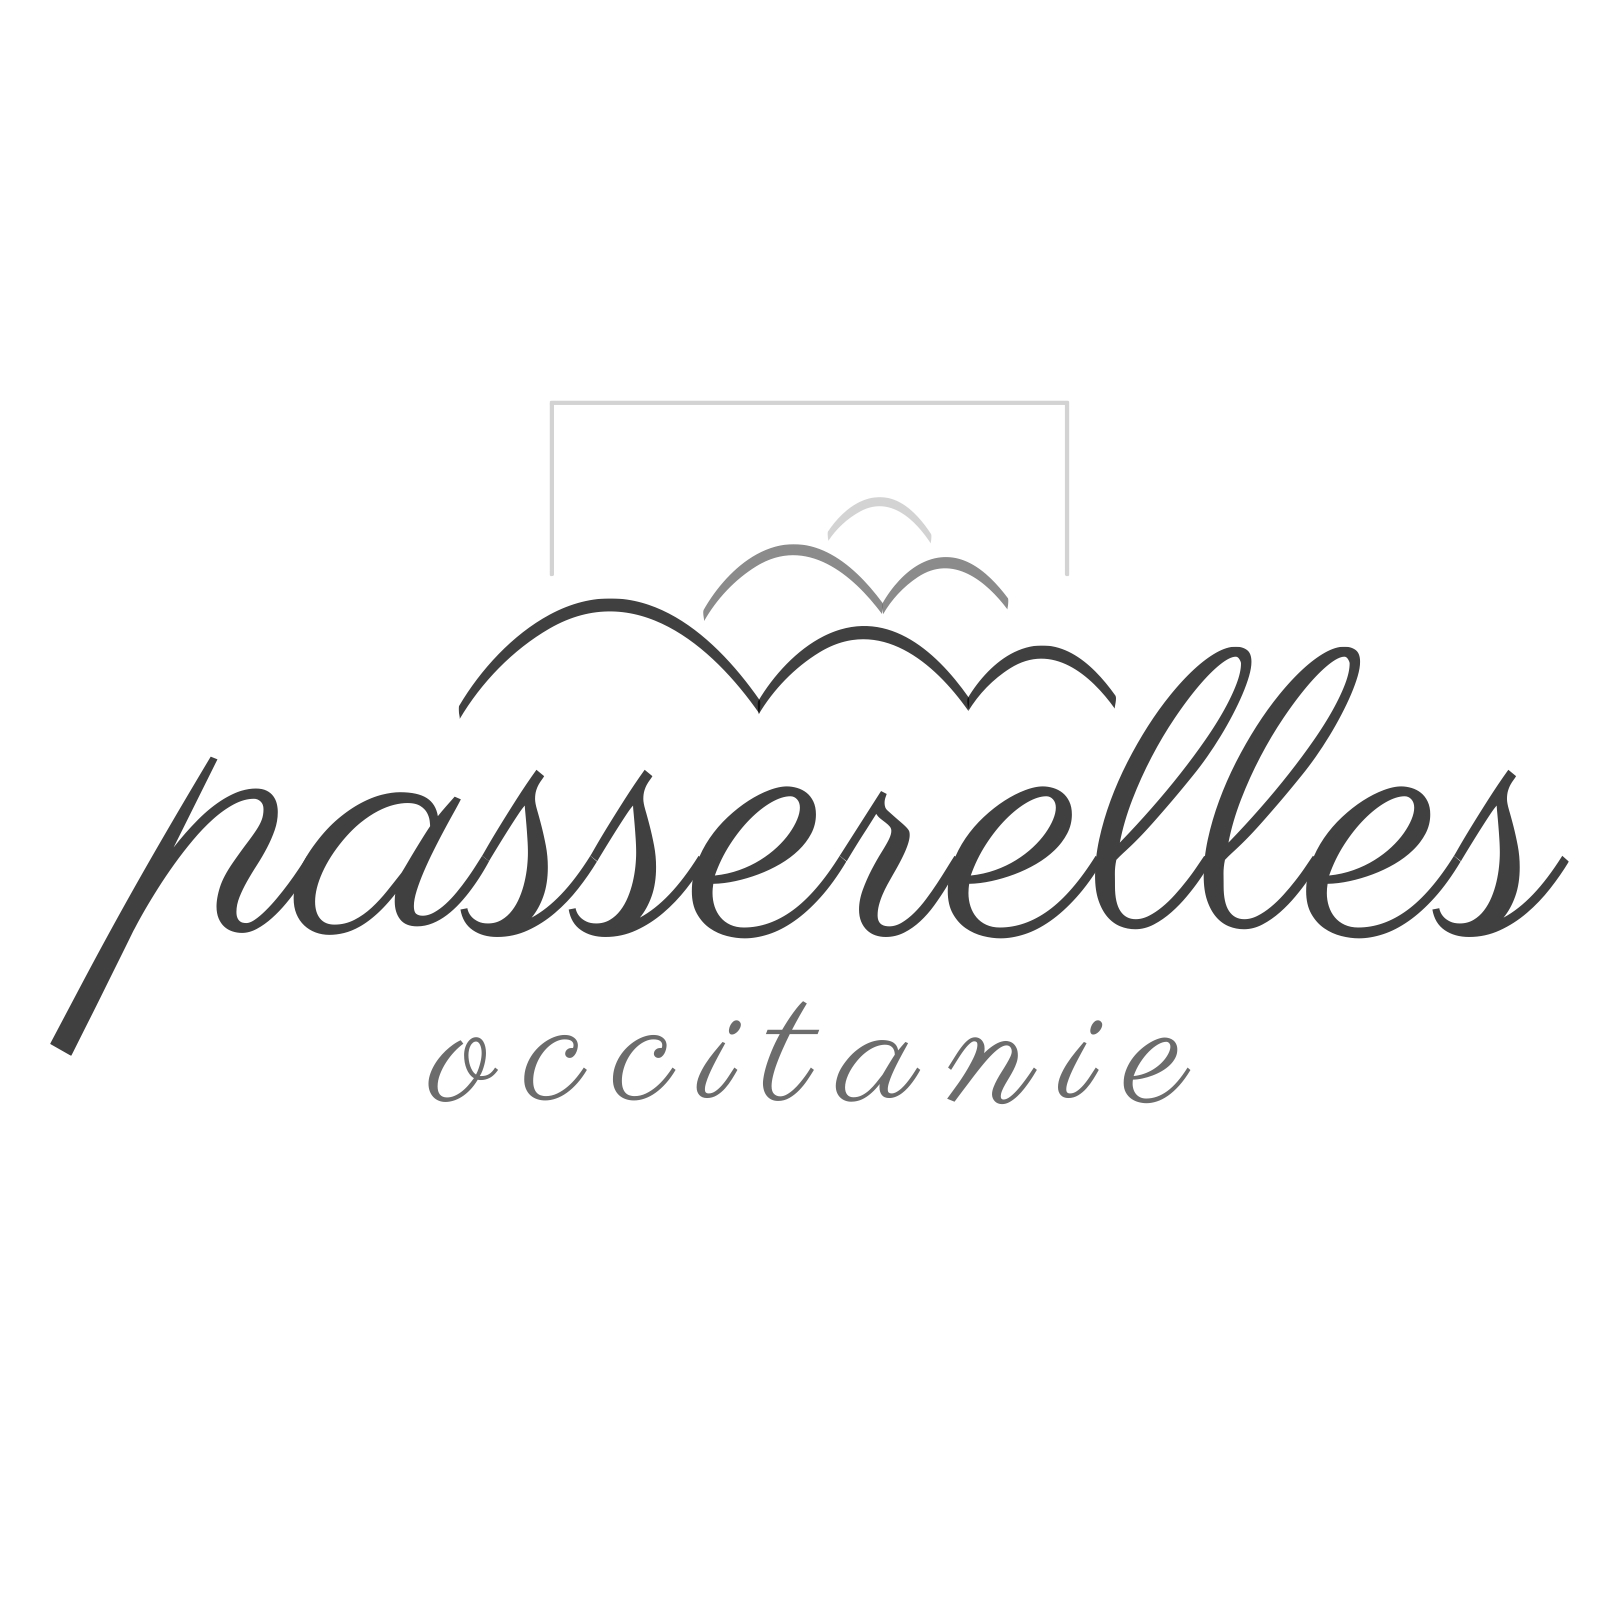 275-logo-passerelles-occitanie-officiel-ok.jpg